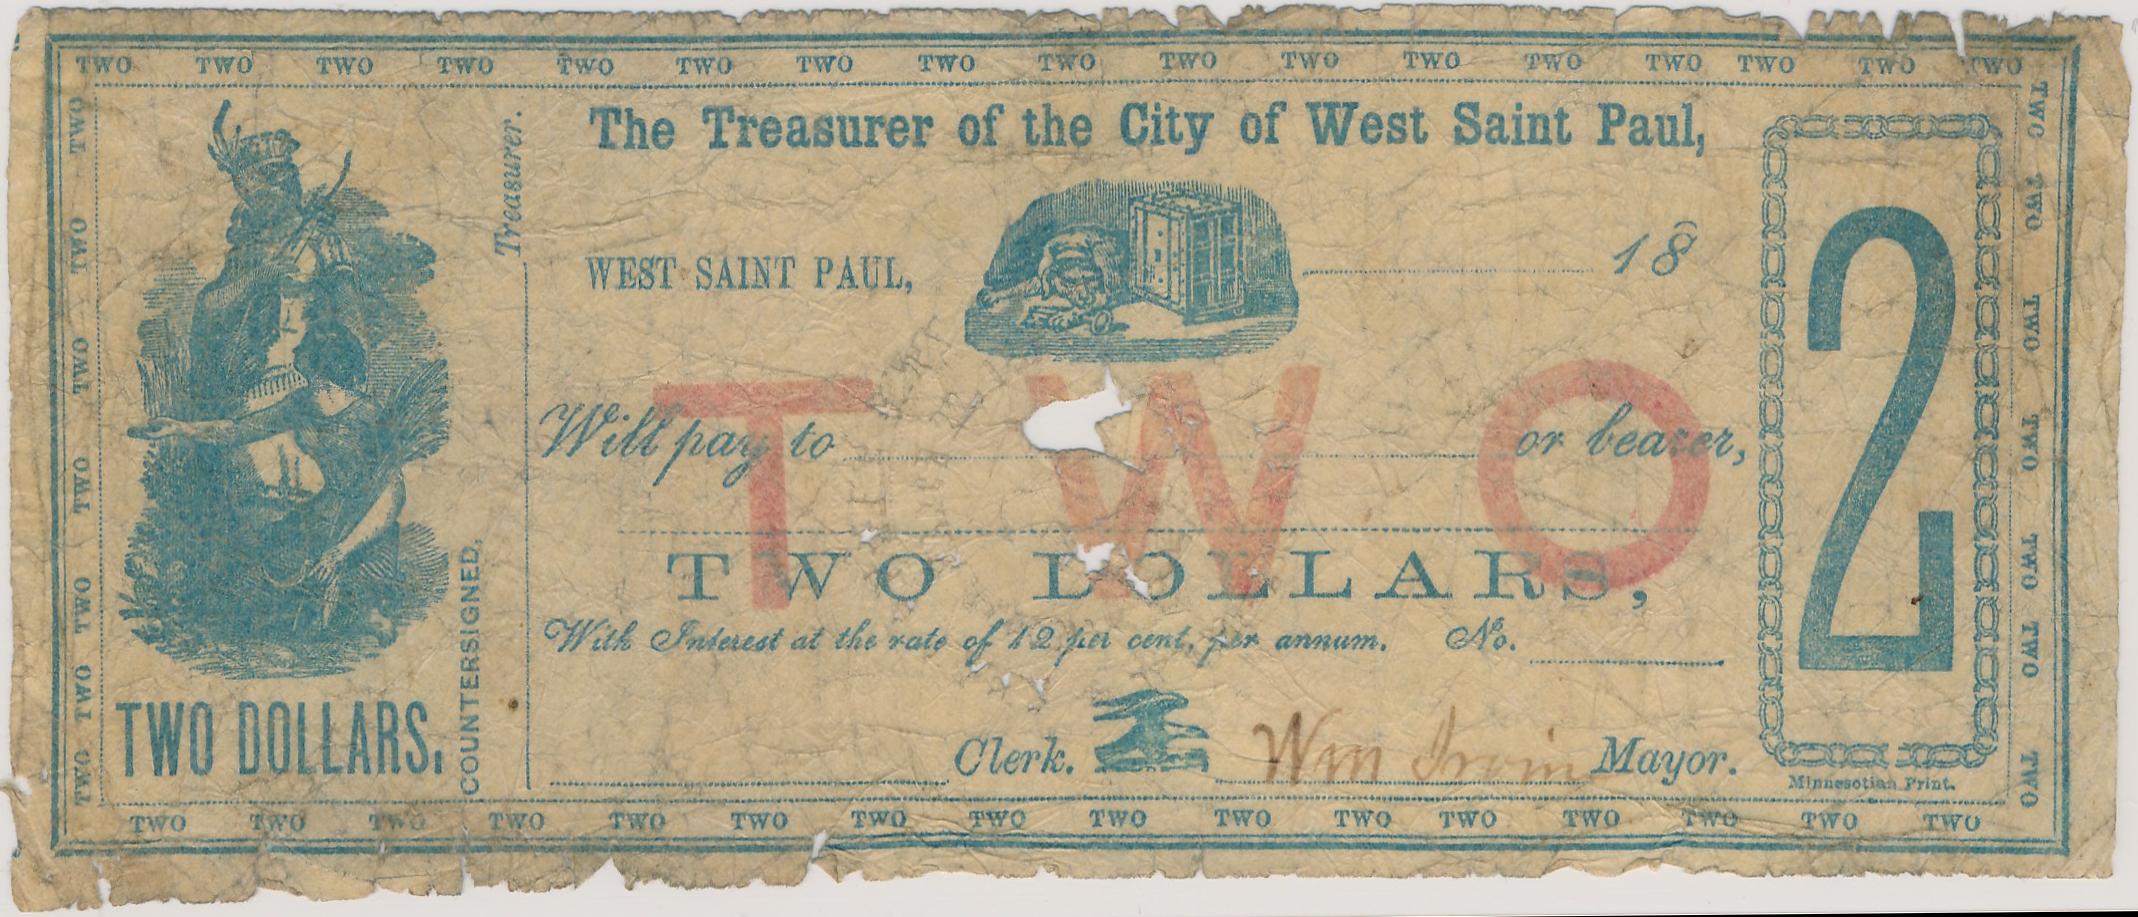 $2 Treasurer of the City of West Saint Paul